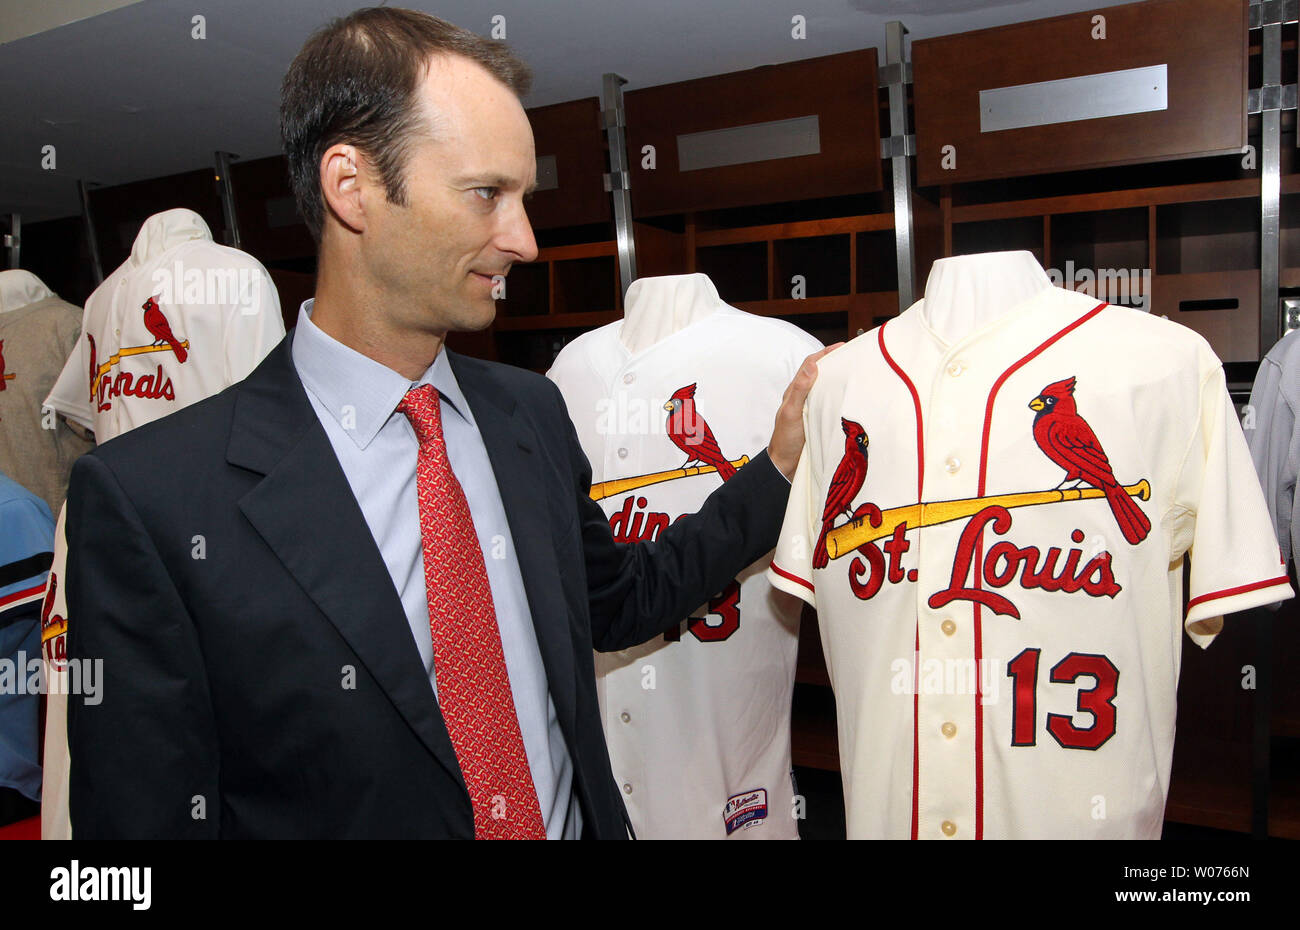 Talking Uniforms with Cardinals President Bill DeWitt III